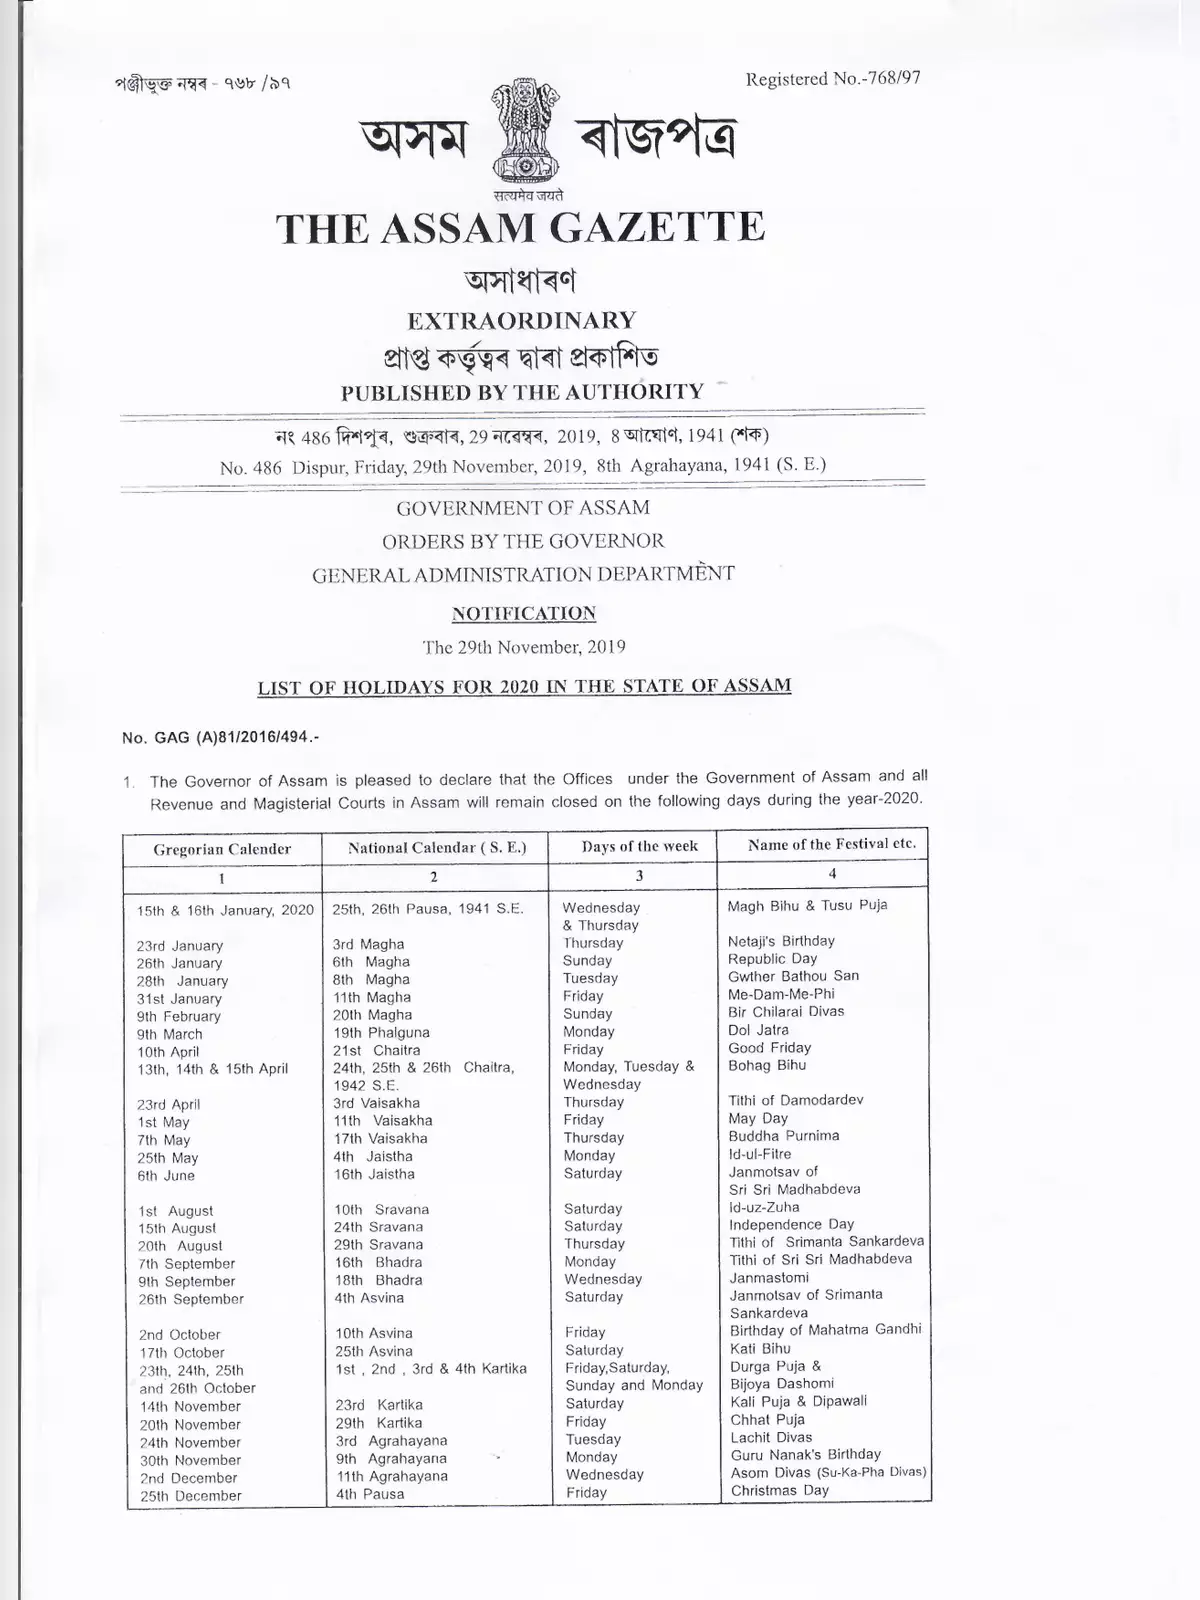 Assam Government Holidays List 2020